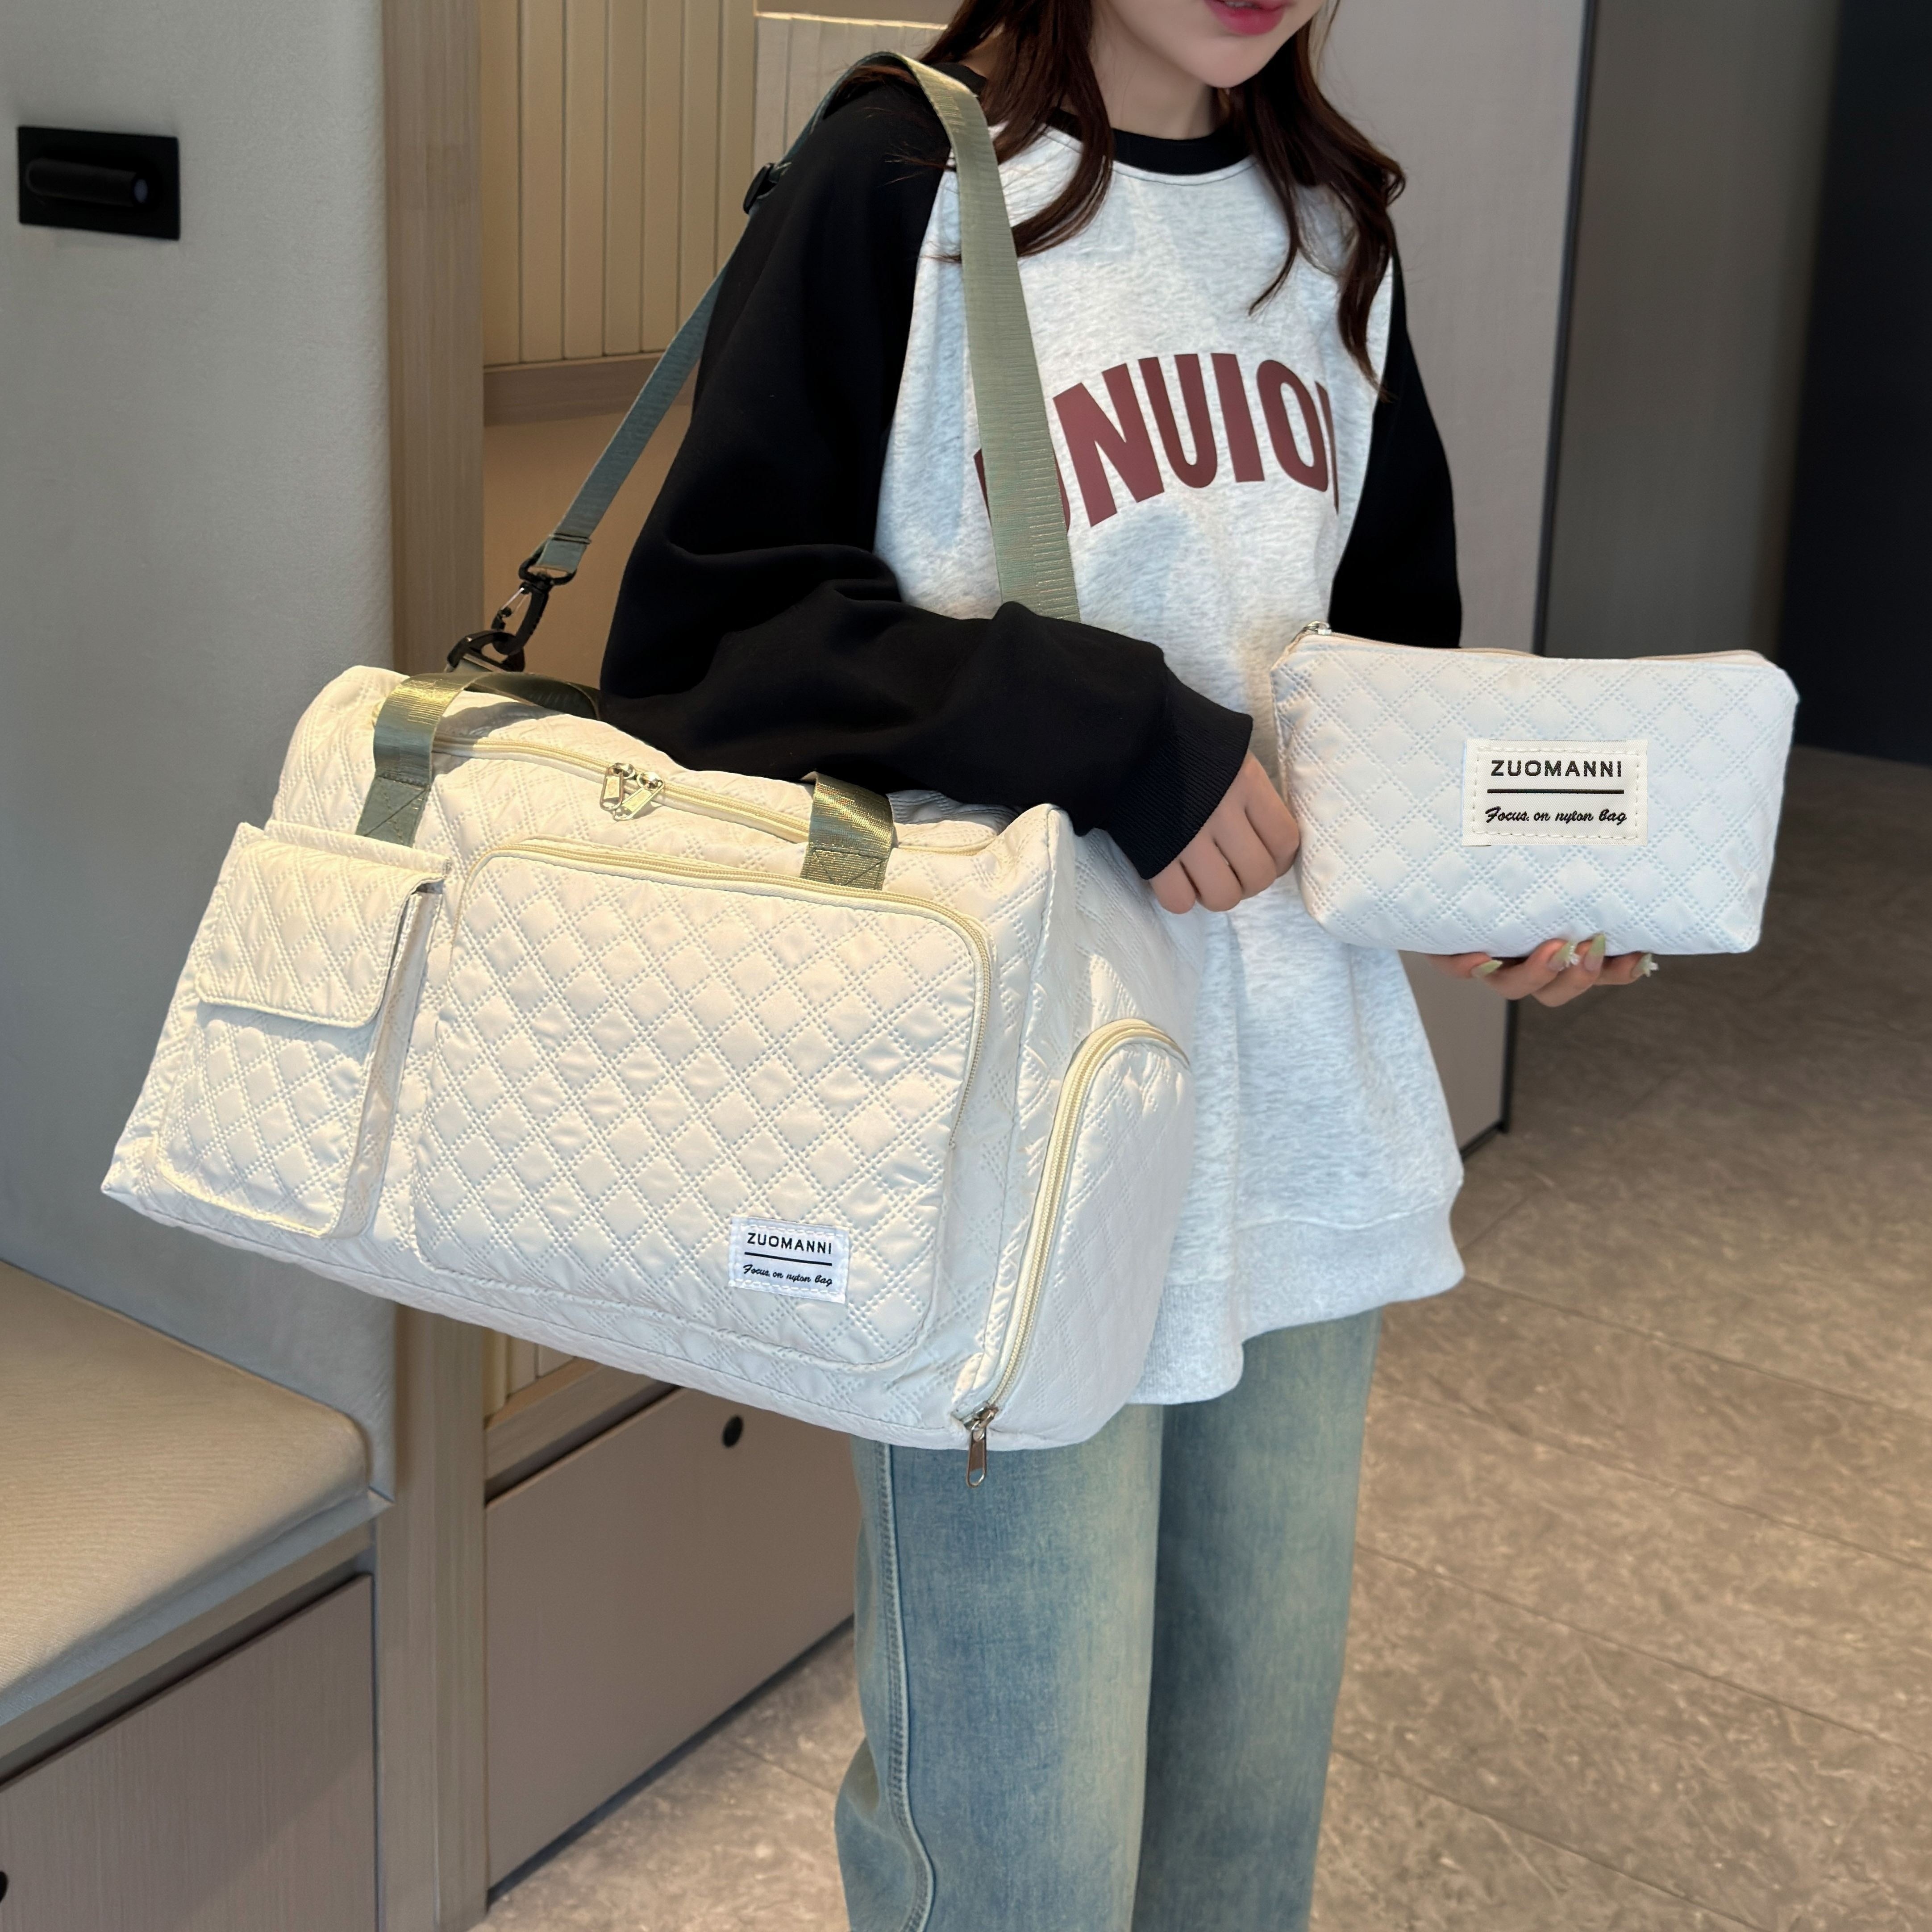 

Travel Large Capacity Duffle Shoulder Bag, With Argyle Pattern Luggage Bag, Lightweight Overnight Bag